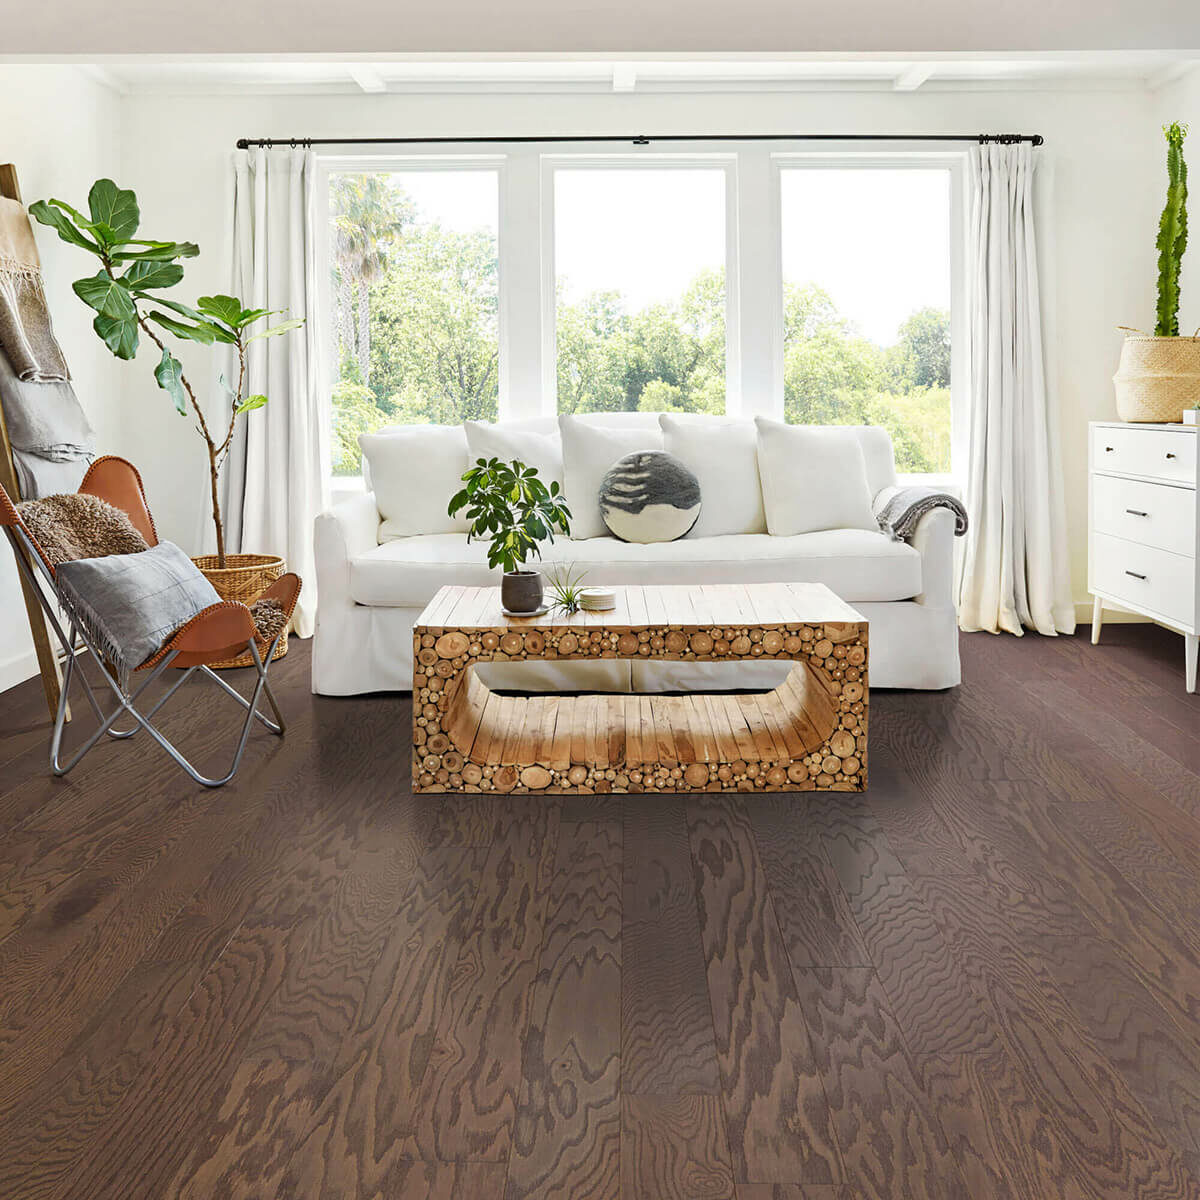 Hardwood flooring | Carpet Collection